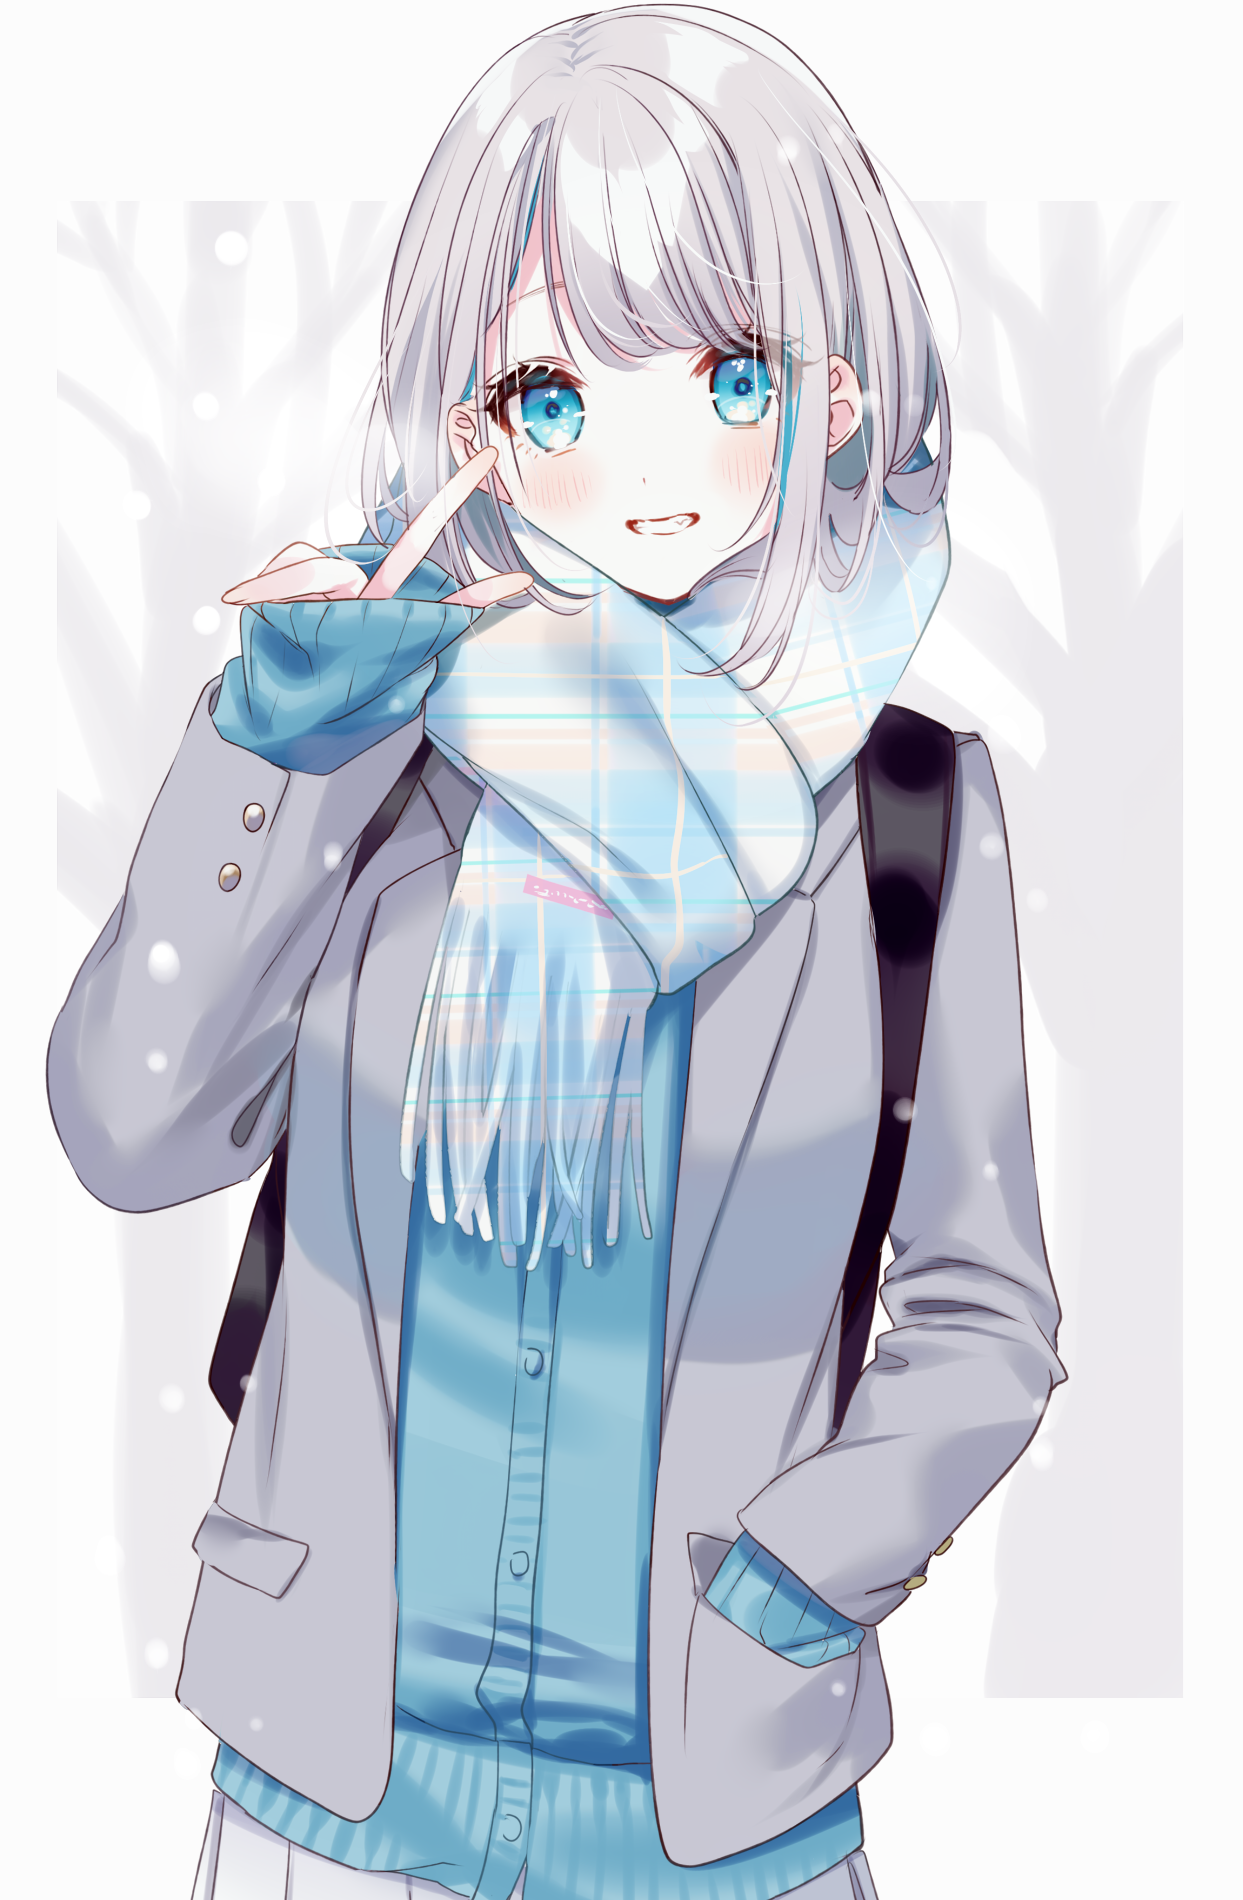 Anime 1243x1900 anime anime girls digital art artwork 2D portrait display Misumi silver hair blue eyes smiling scarf